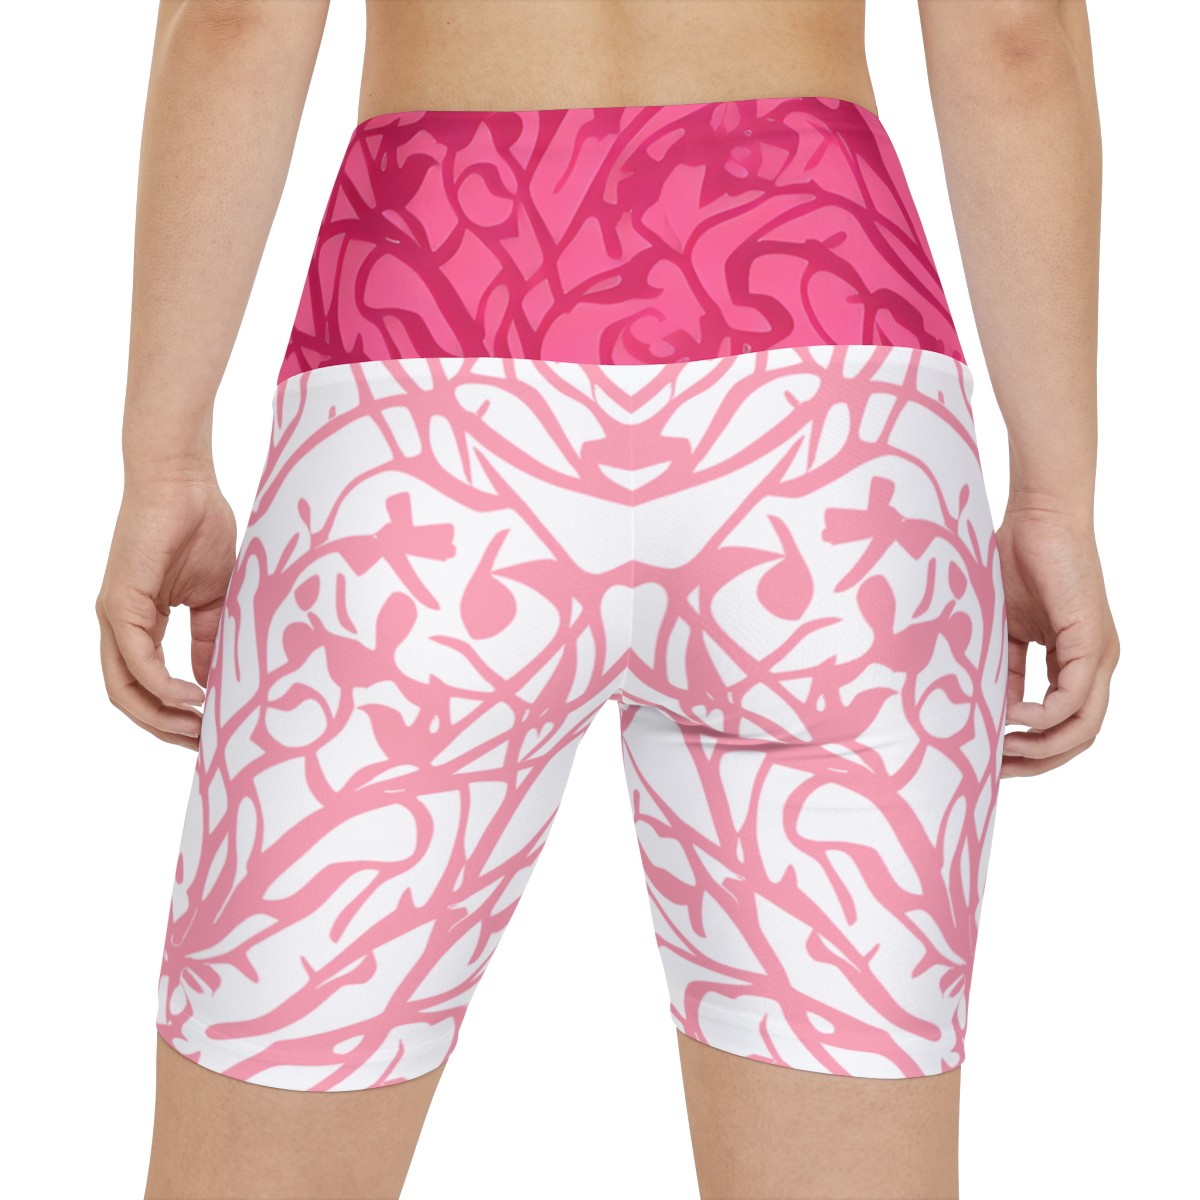 Blush on Pink: Women's Workout Shorts product thumbnail image